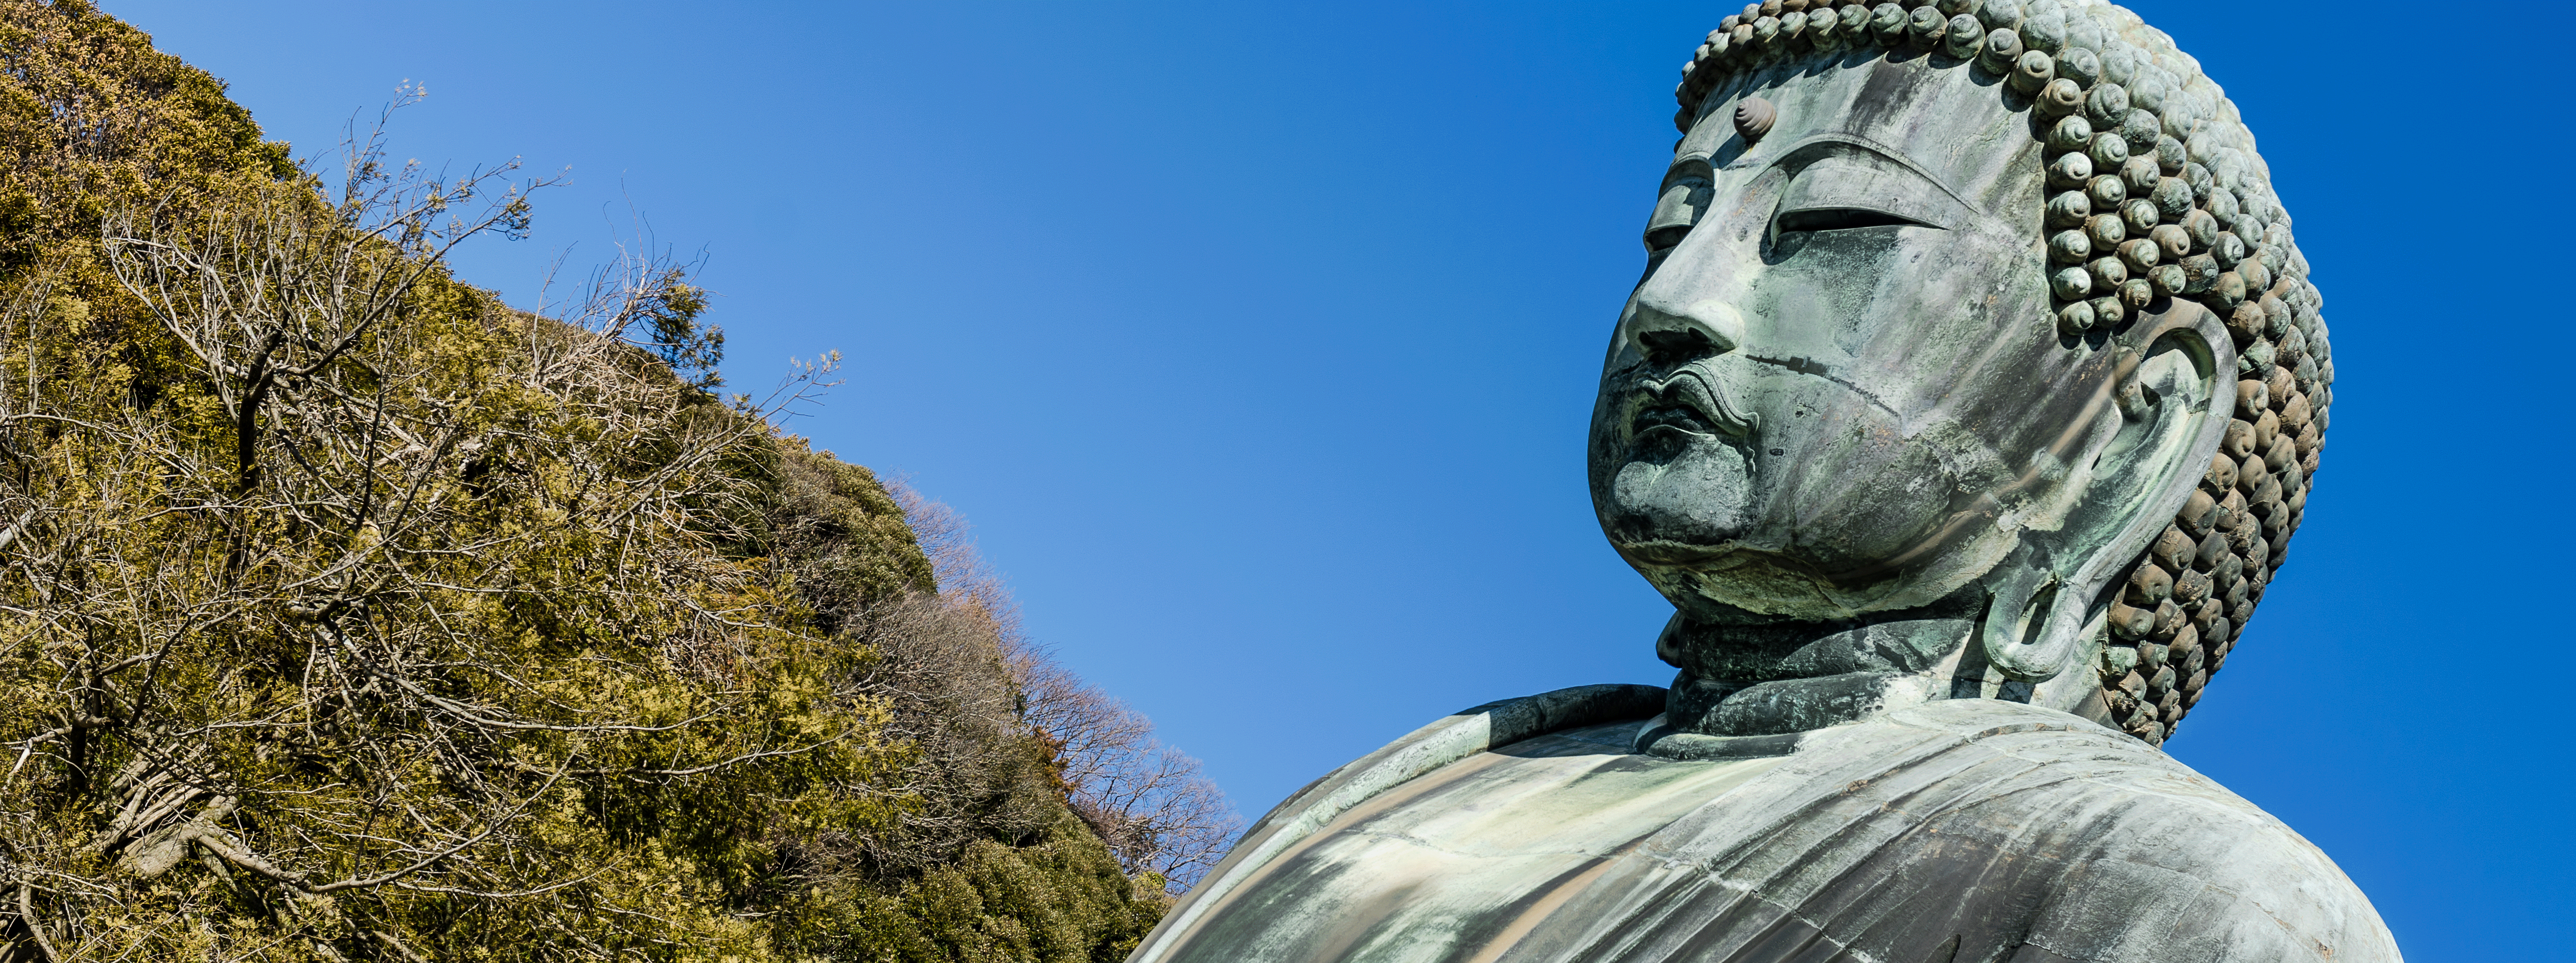 /resource/Images/hongkong/headerimage/Big-Buddha-Kamakura-Japan-.png